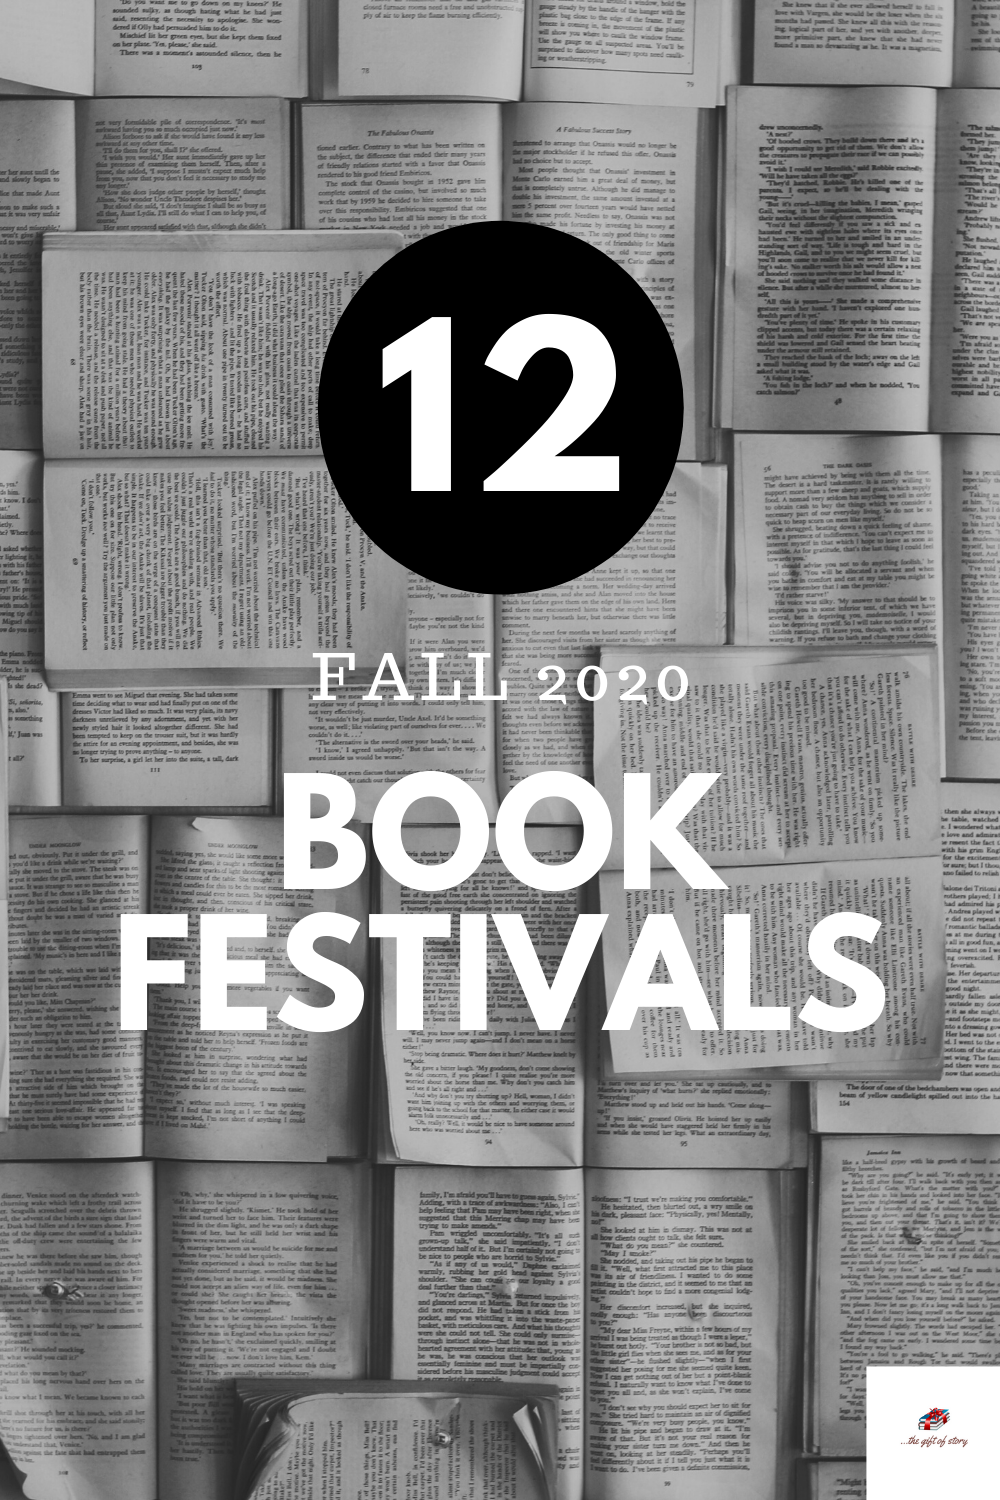 Book Festivals Fall 2020 - Mary Helen Sheriff